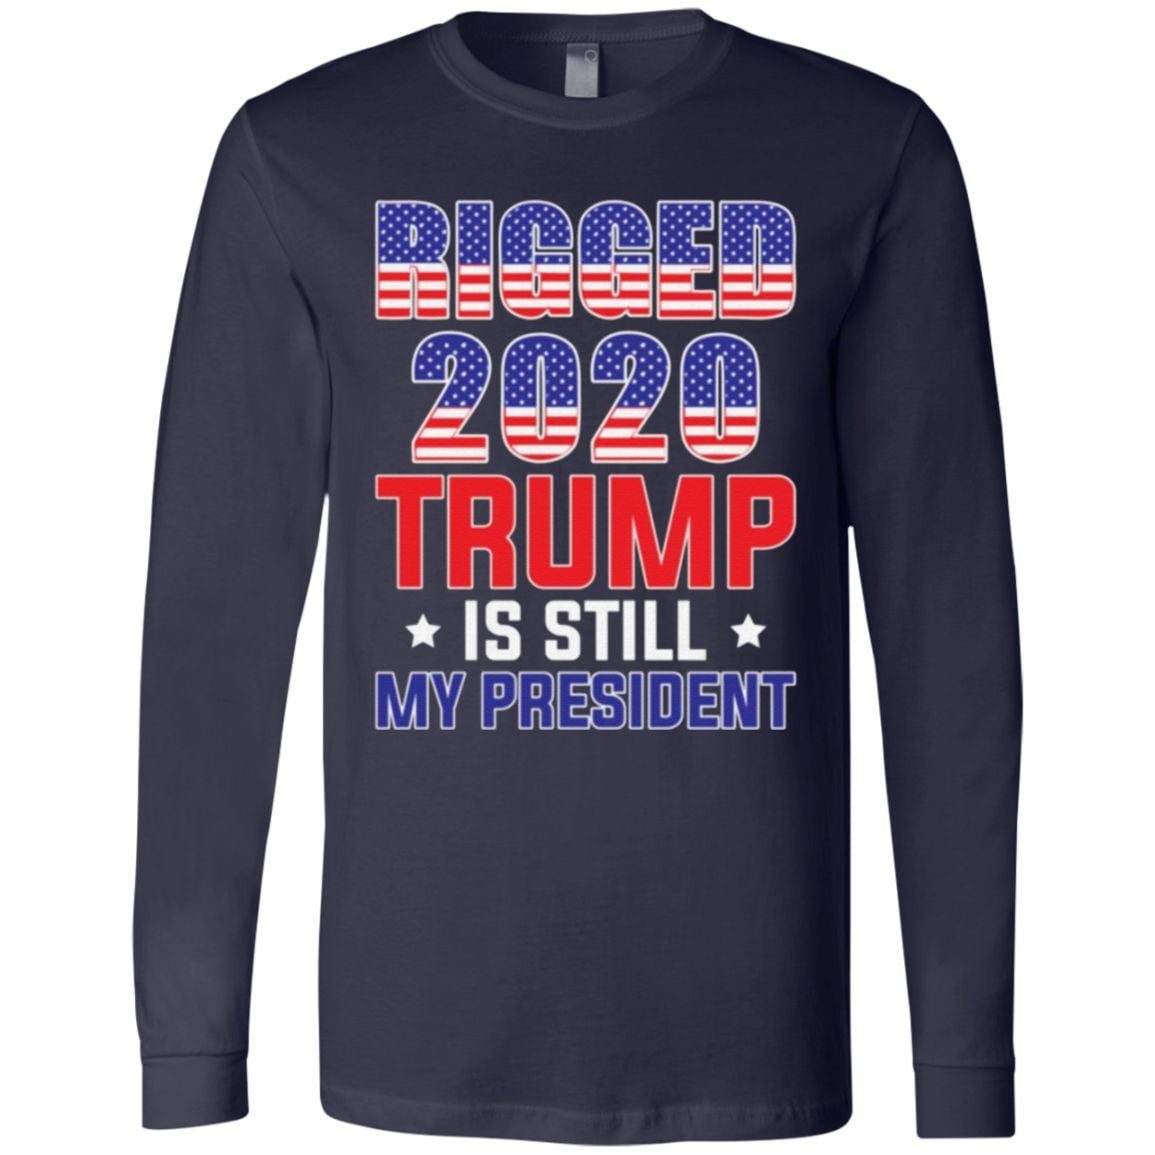 Rigged 2020 Trump Is Still My President T-Shirt